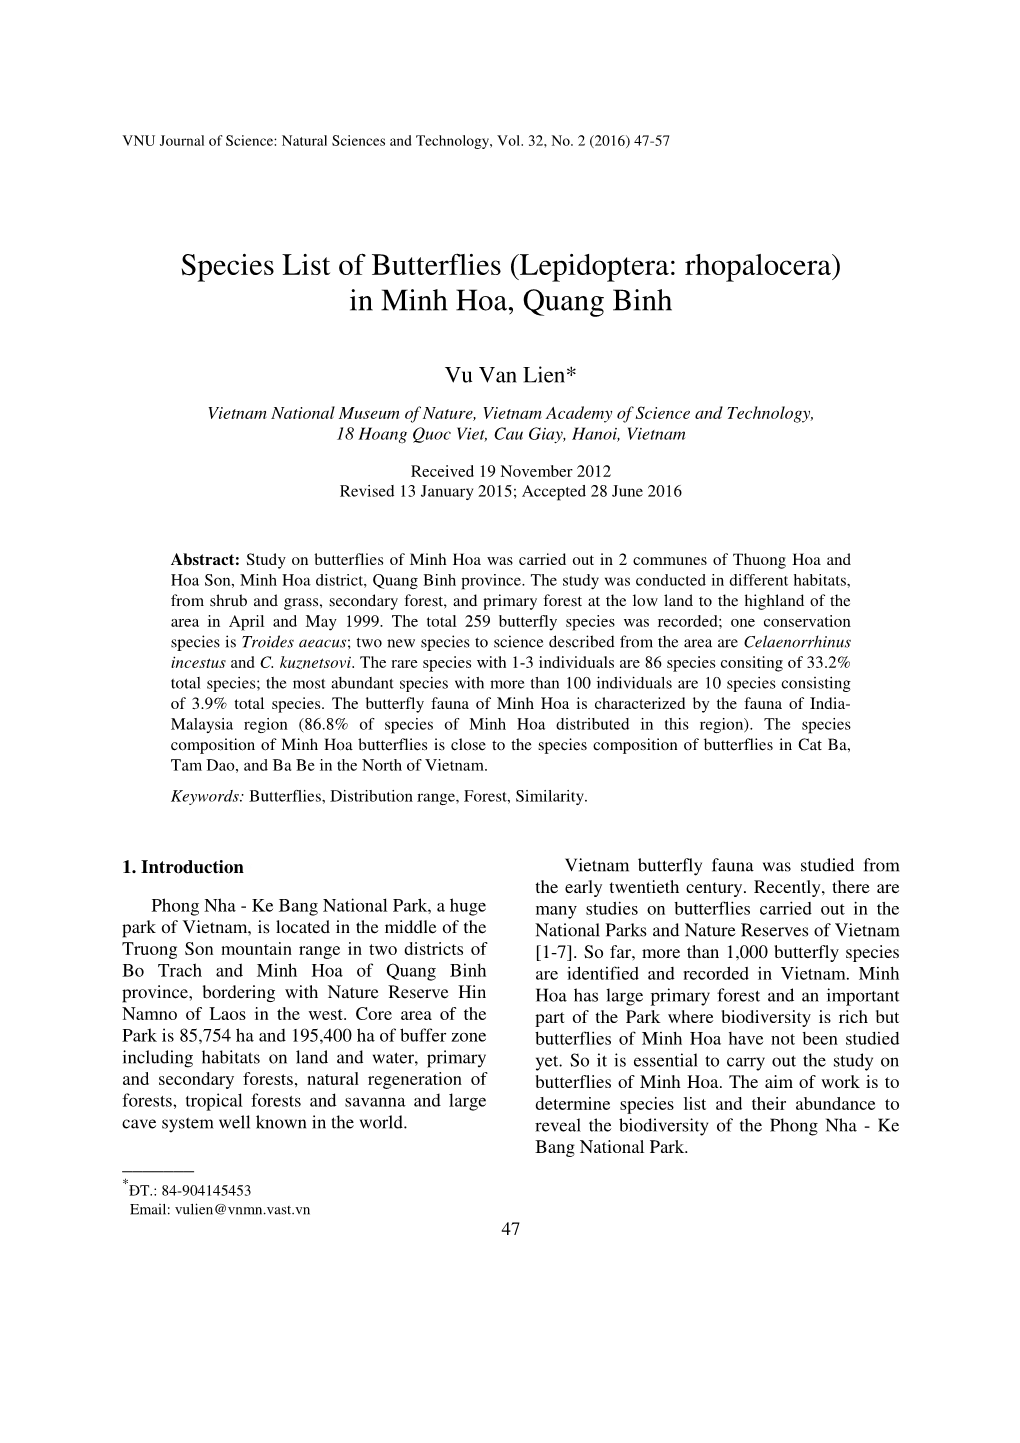 Species List of Butterflies (Lepidoptera: Rhopalocera) in Minh Hoa, Quang Binh